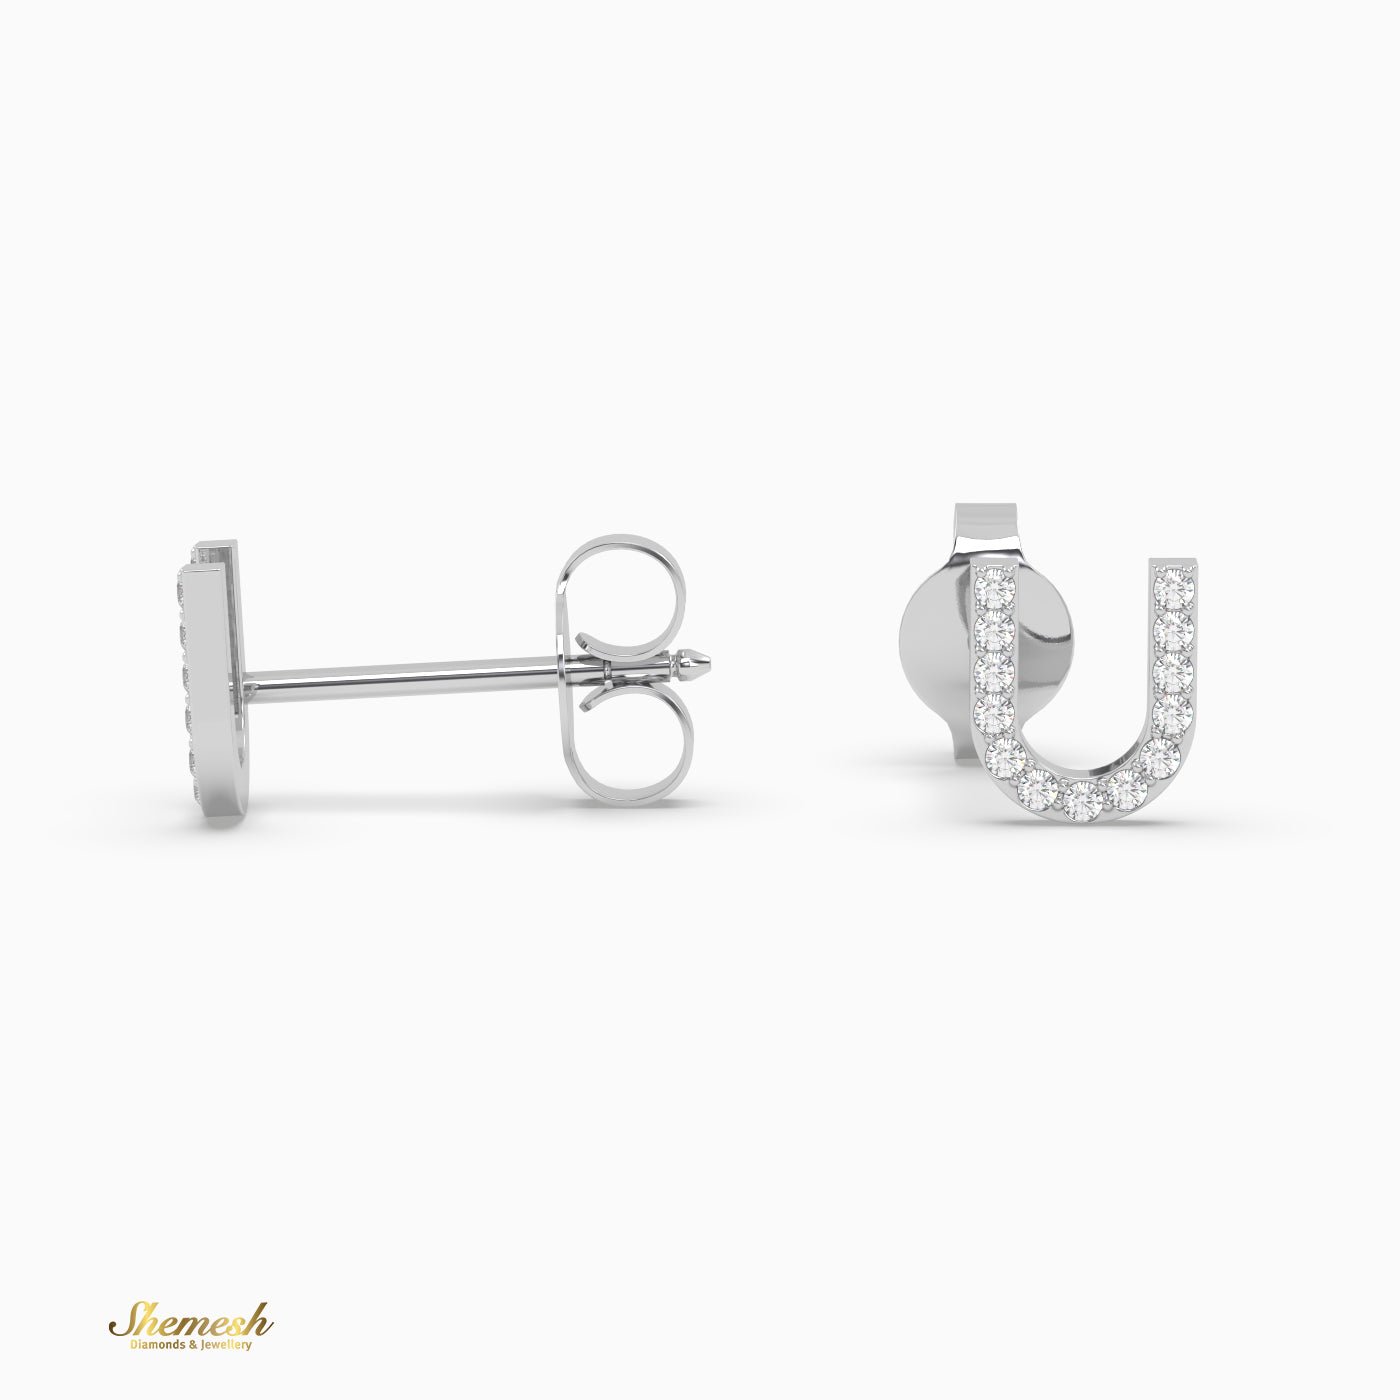 18K Gold "U" Initial Stud Earrings - shemesh_diamonds